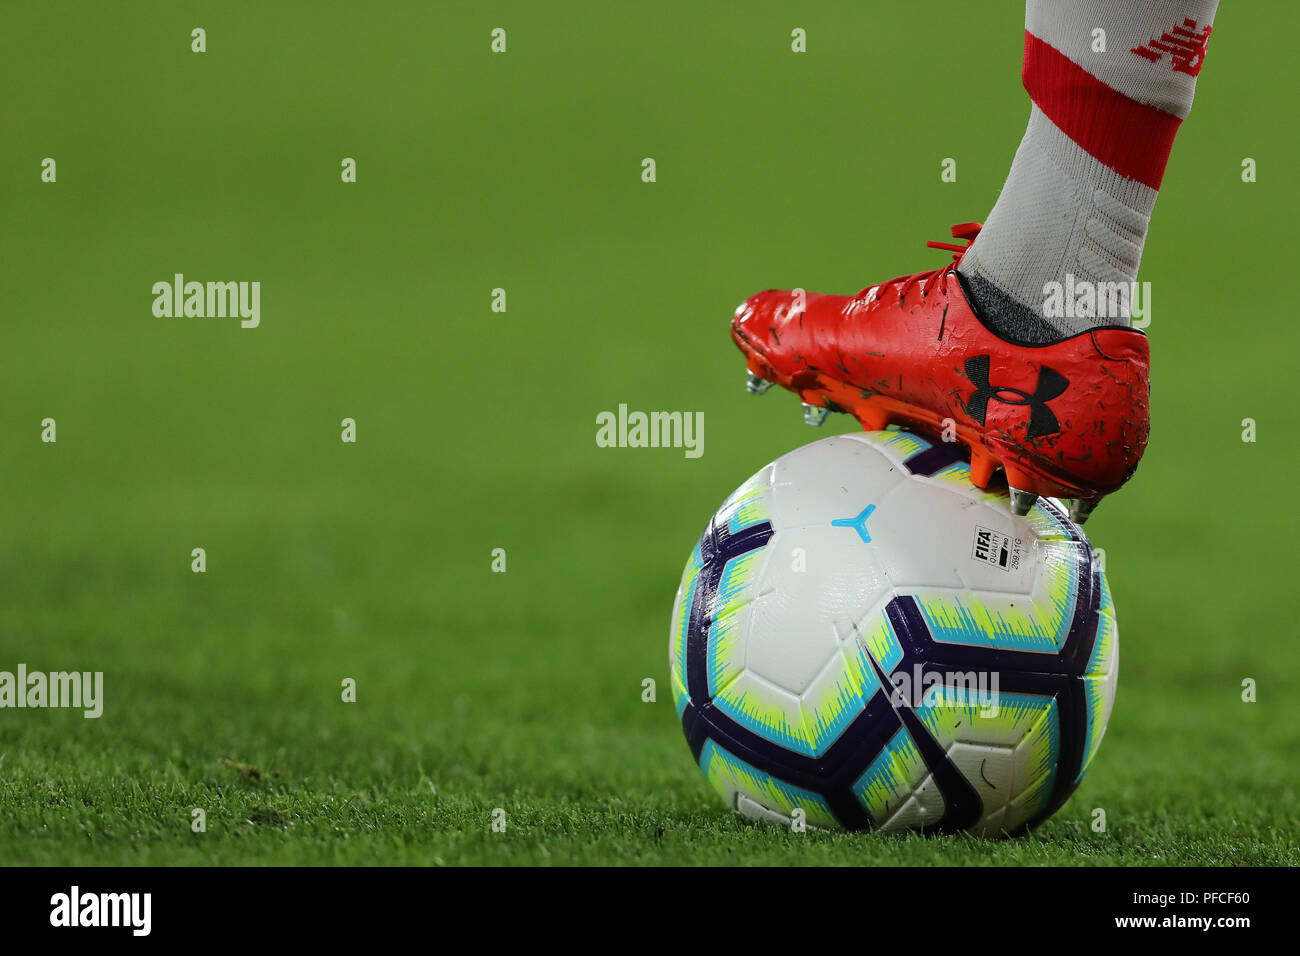 Nike premier league football 2018 fotografías e imágenes de - Alamy